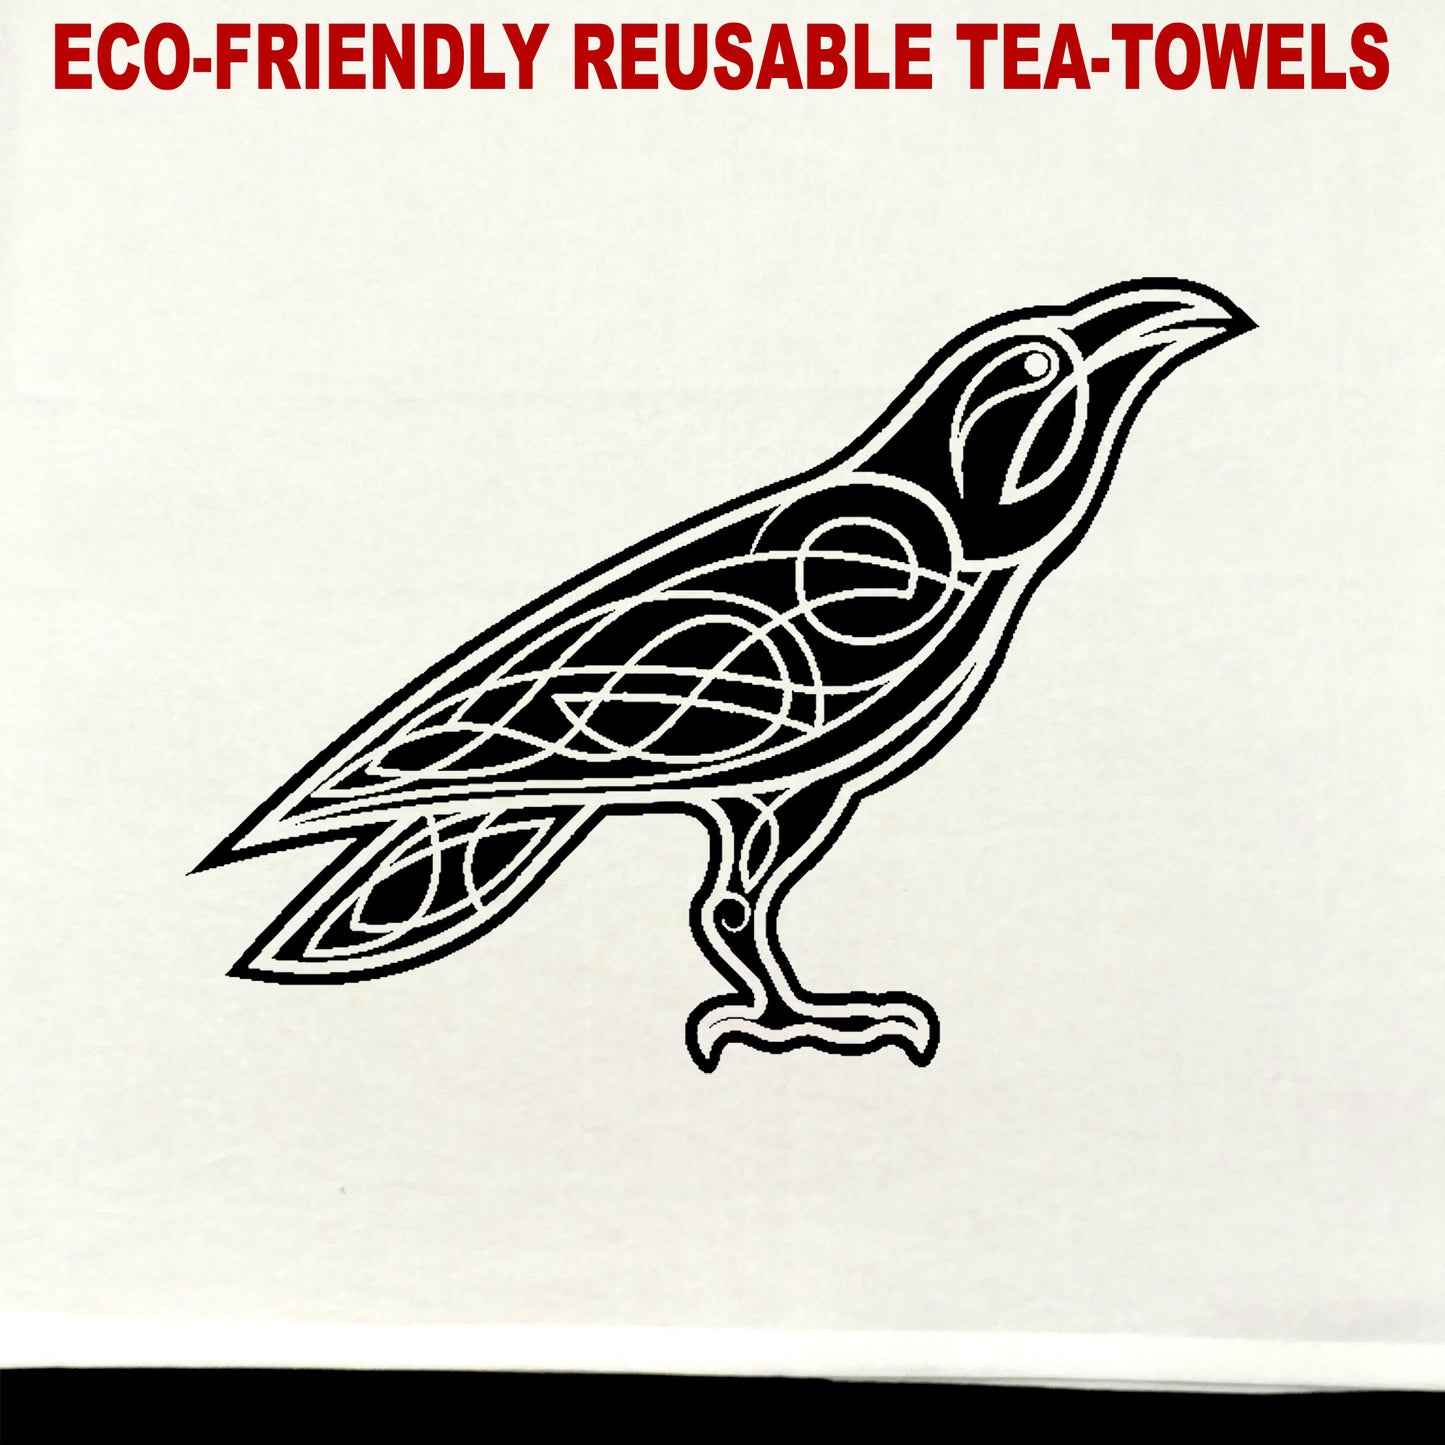 Knotwork Raven Tea Towel / tea towel / dish towel / hand towel / reusable wipe / kitchen gift / kitchen deco